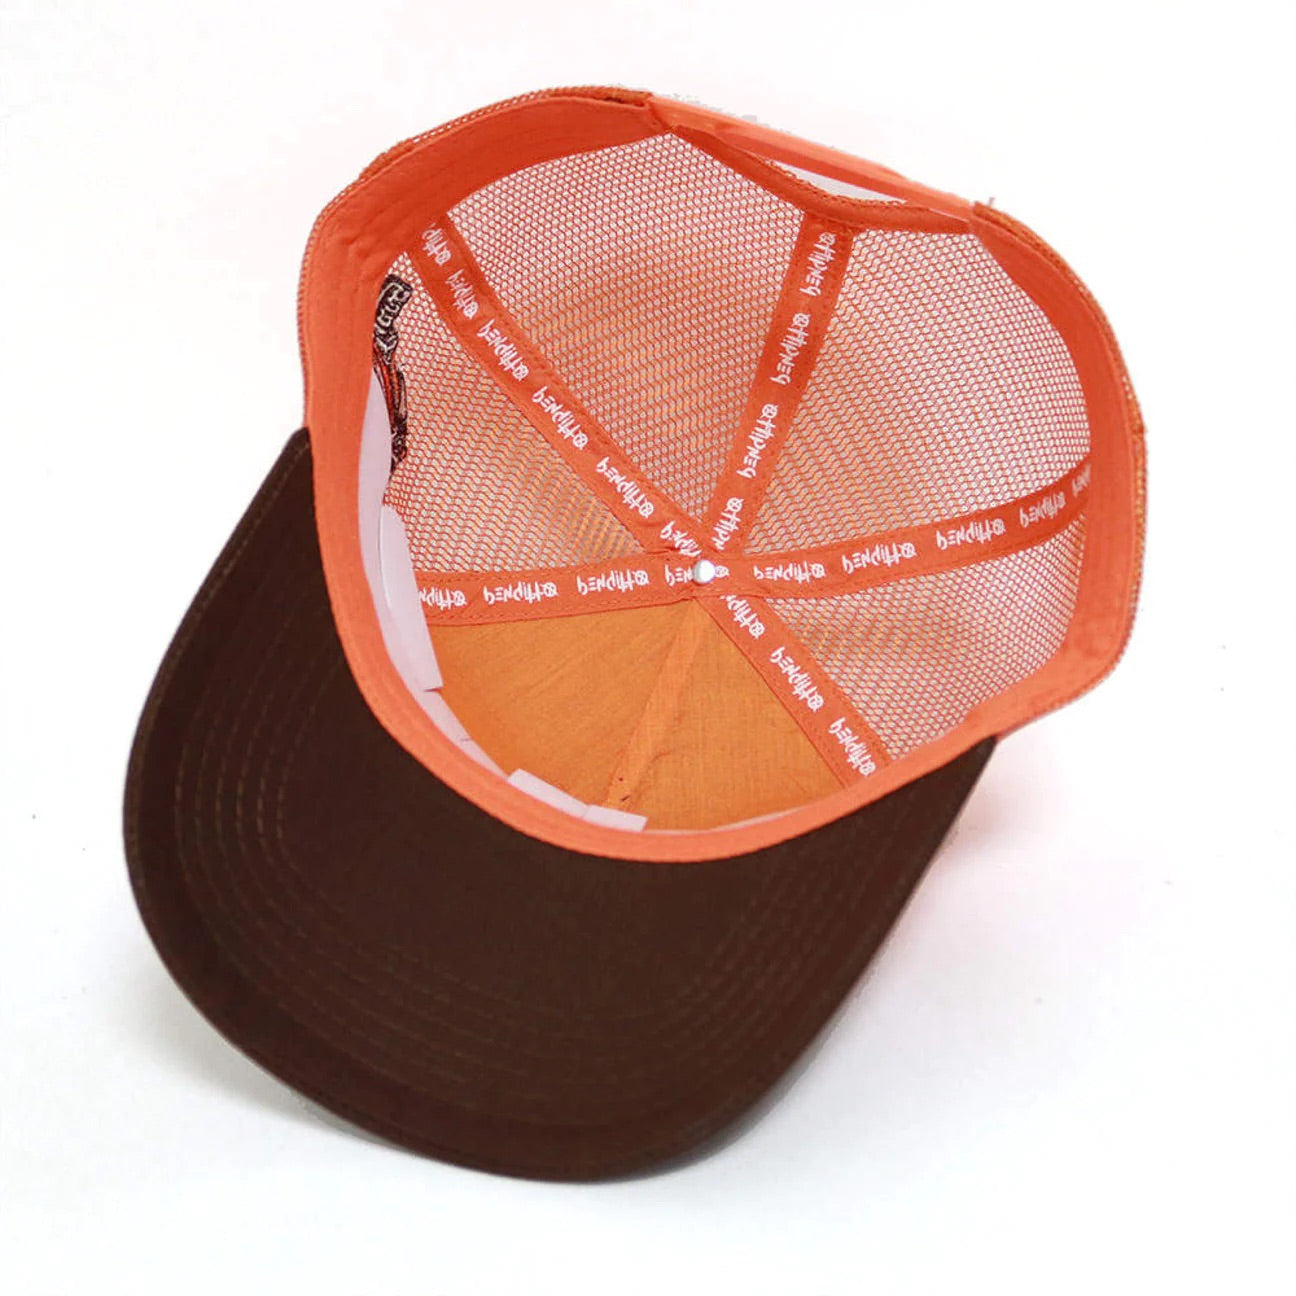 Benditto Trucker Hat (brown / orange)